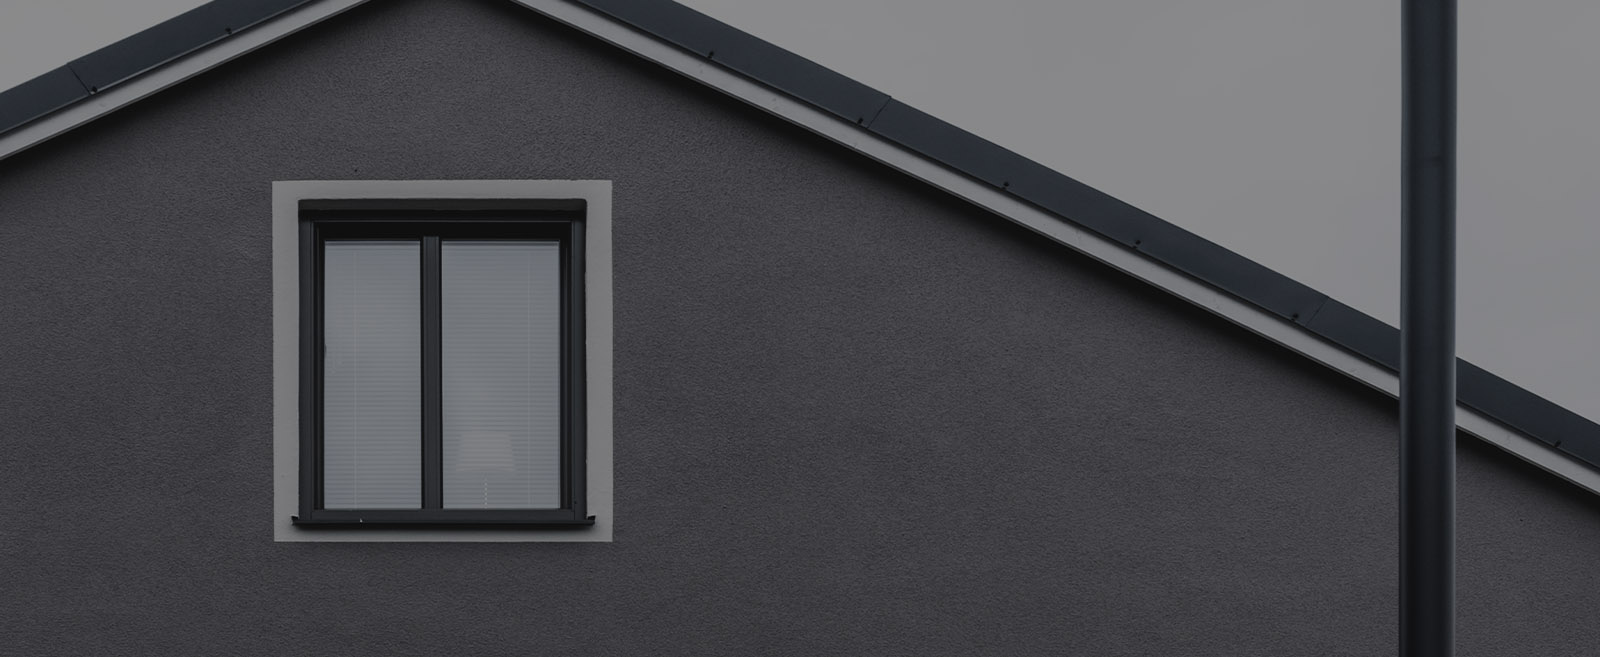 windows on a gray stucco home